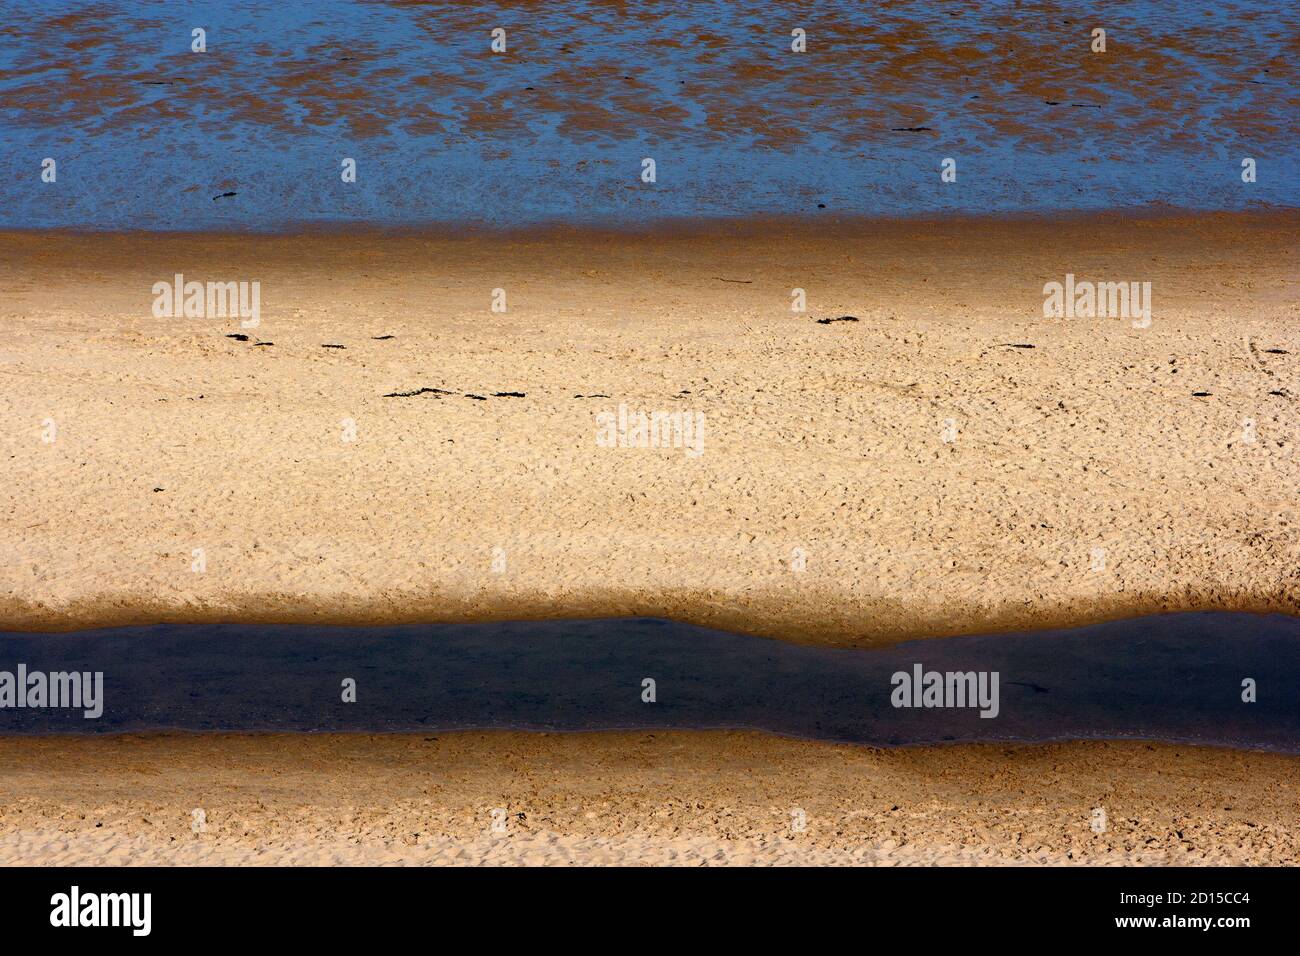 Beach, seaside, coast, abstract photo, minimalist beach photo, blue yellow brown abstract, sea and sand, minimalist landscape, colourful beach photo Stock Photo